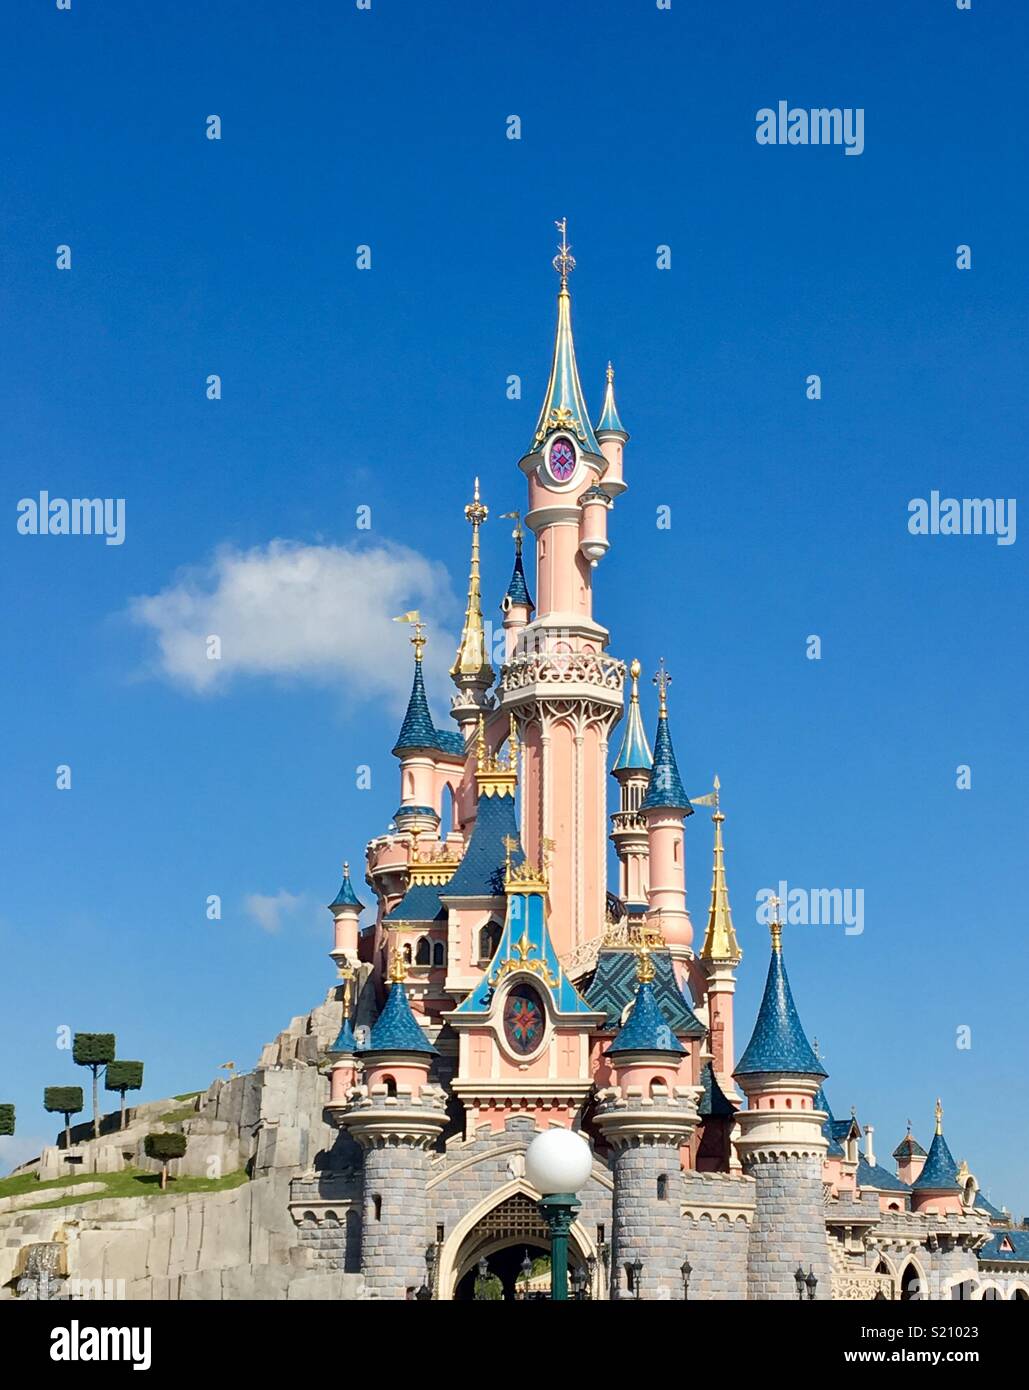 Castle at Disneyland Paris Stock Photo